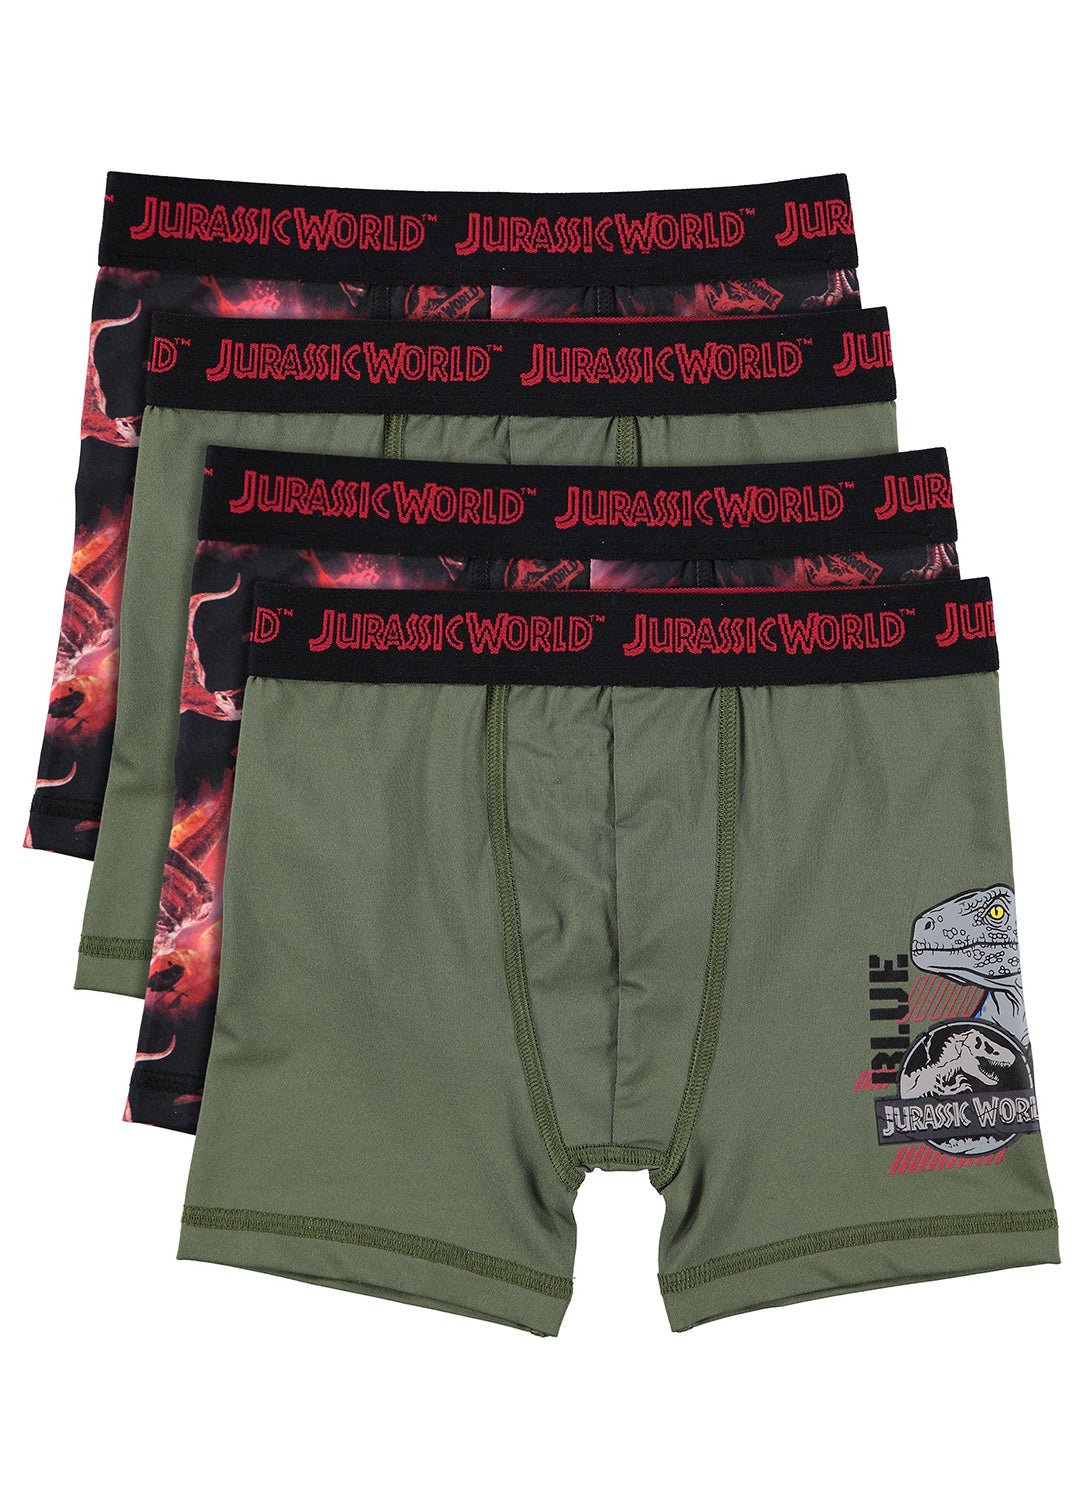 4 Underwear for Boys with Jurassic World prints